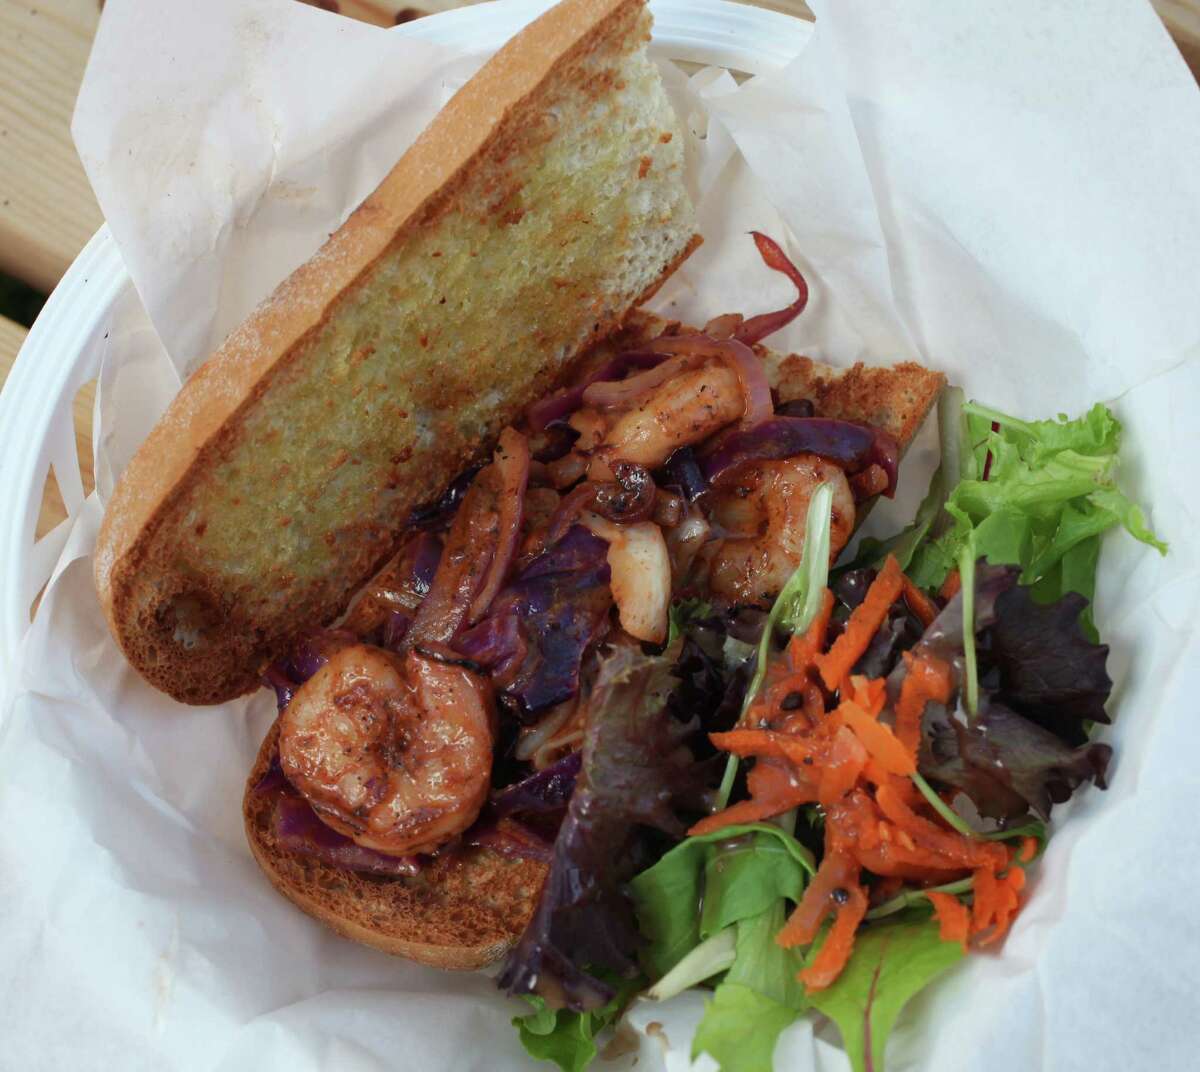 Lil' Shrimp Boy (sauteed shrimp po-boy on gluten-free bread) from Sweet Yams.